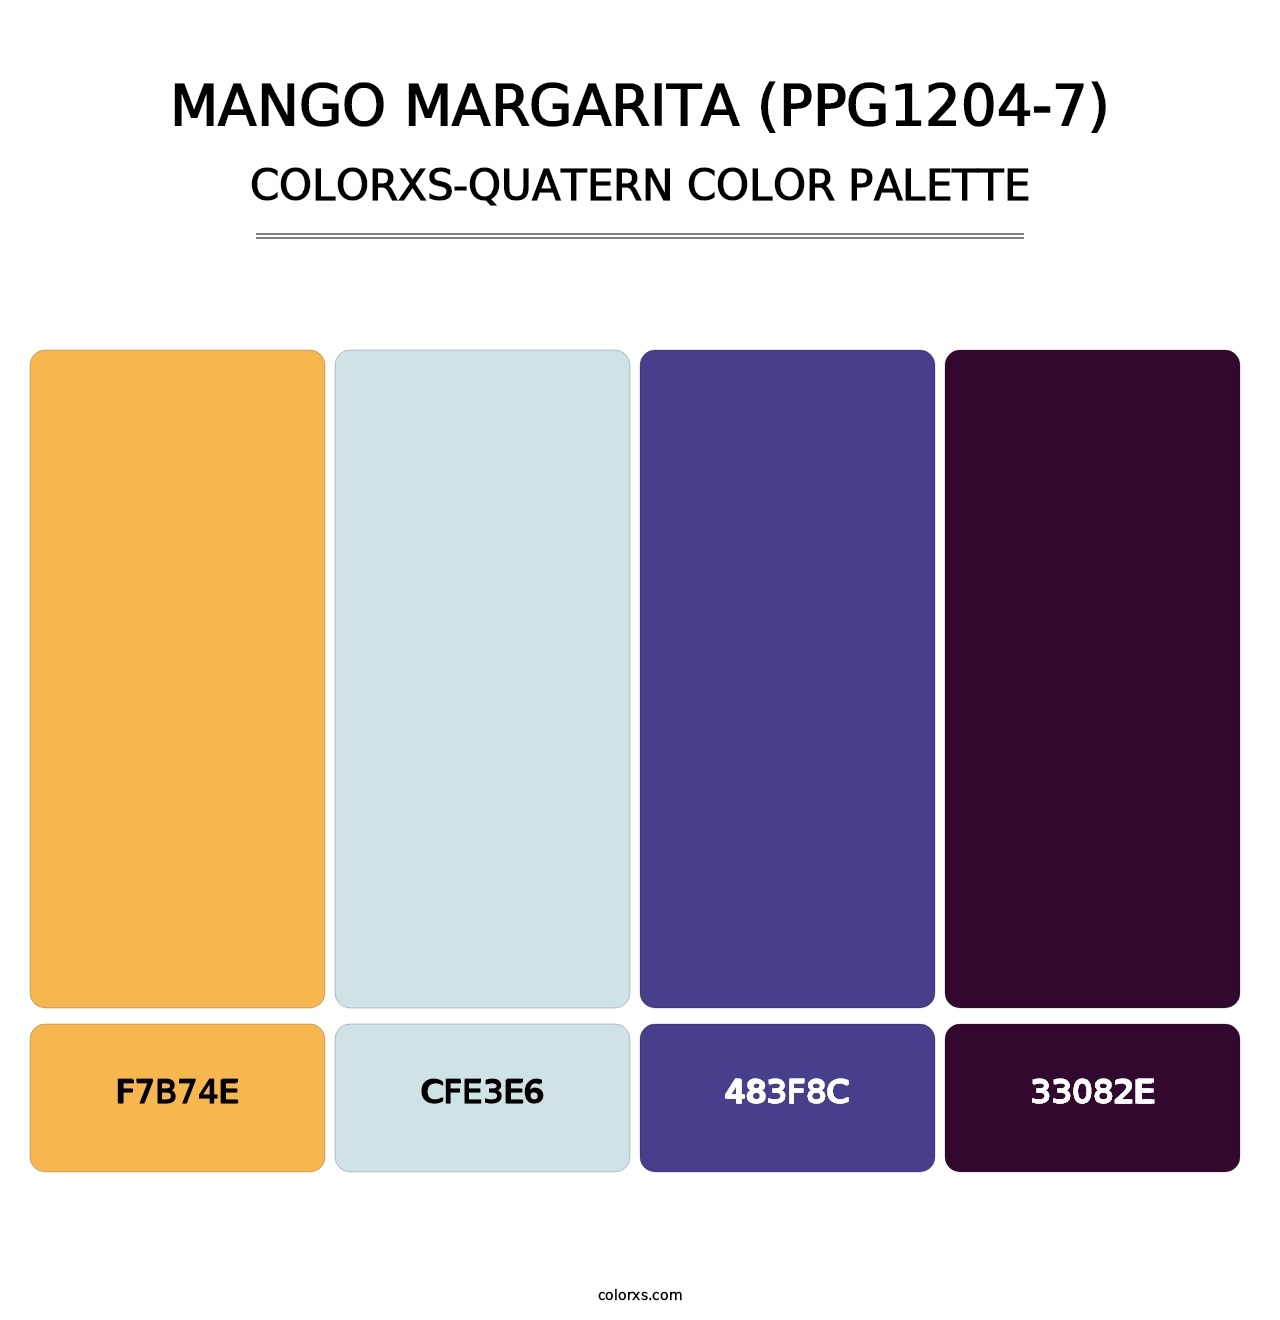 Mango Margarita (PPG1204-7) - Colorxs Quatern Palette